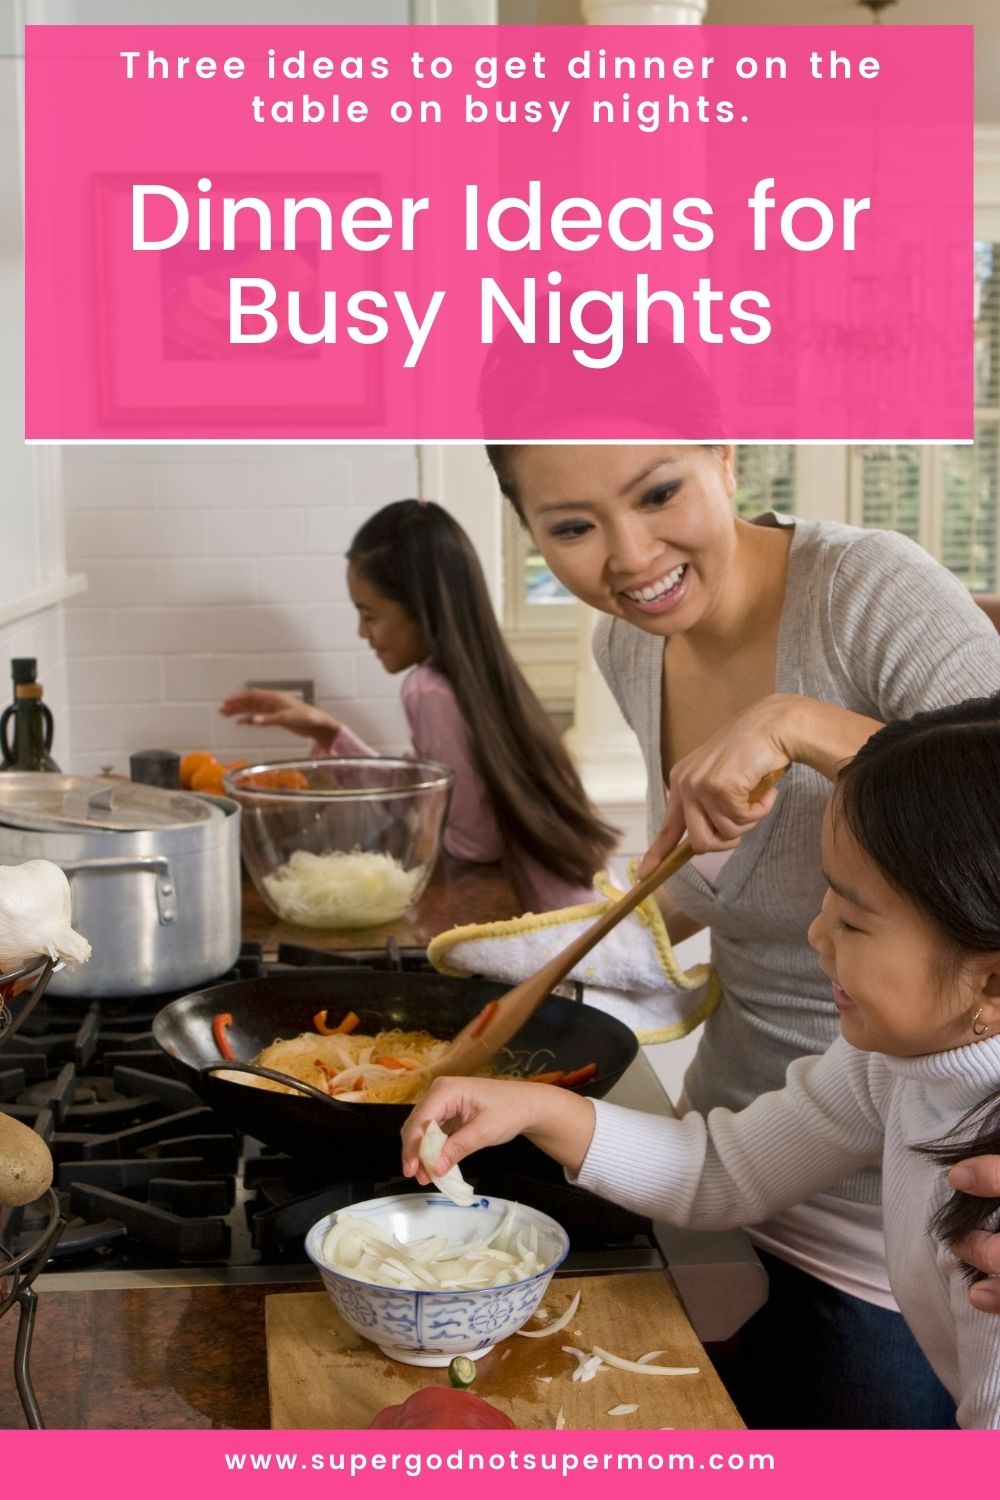 Dinner Ideas for Busy Nights - Super God, Not Super Mom